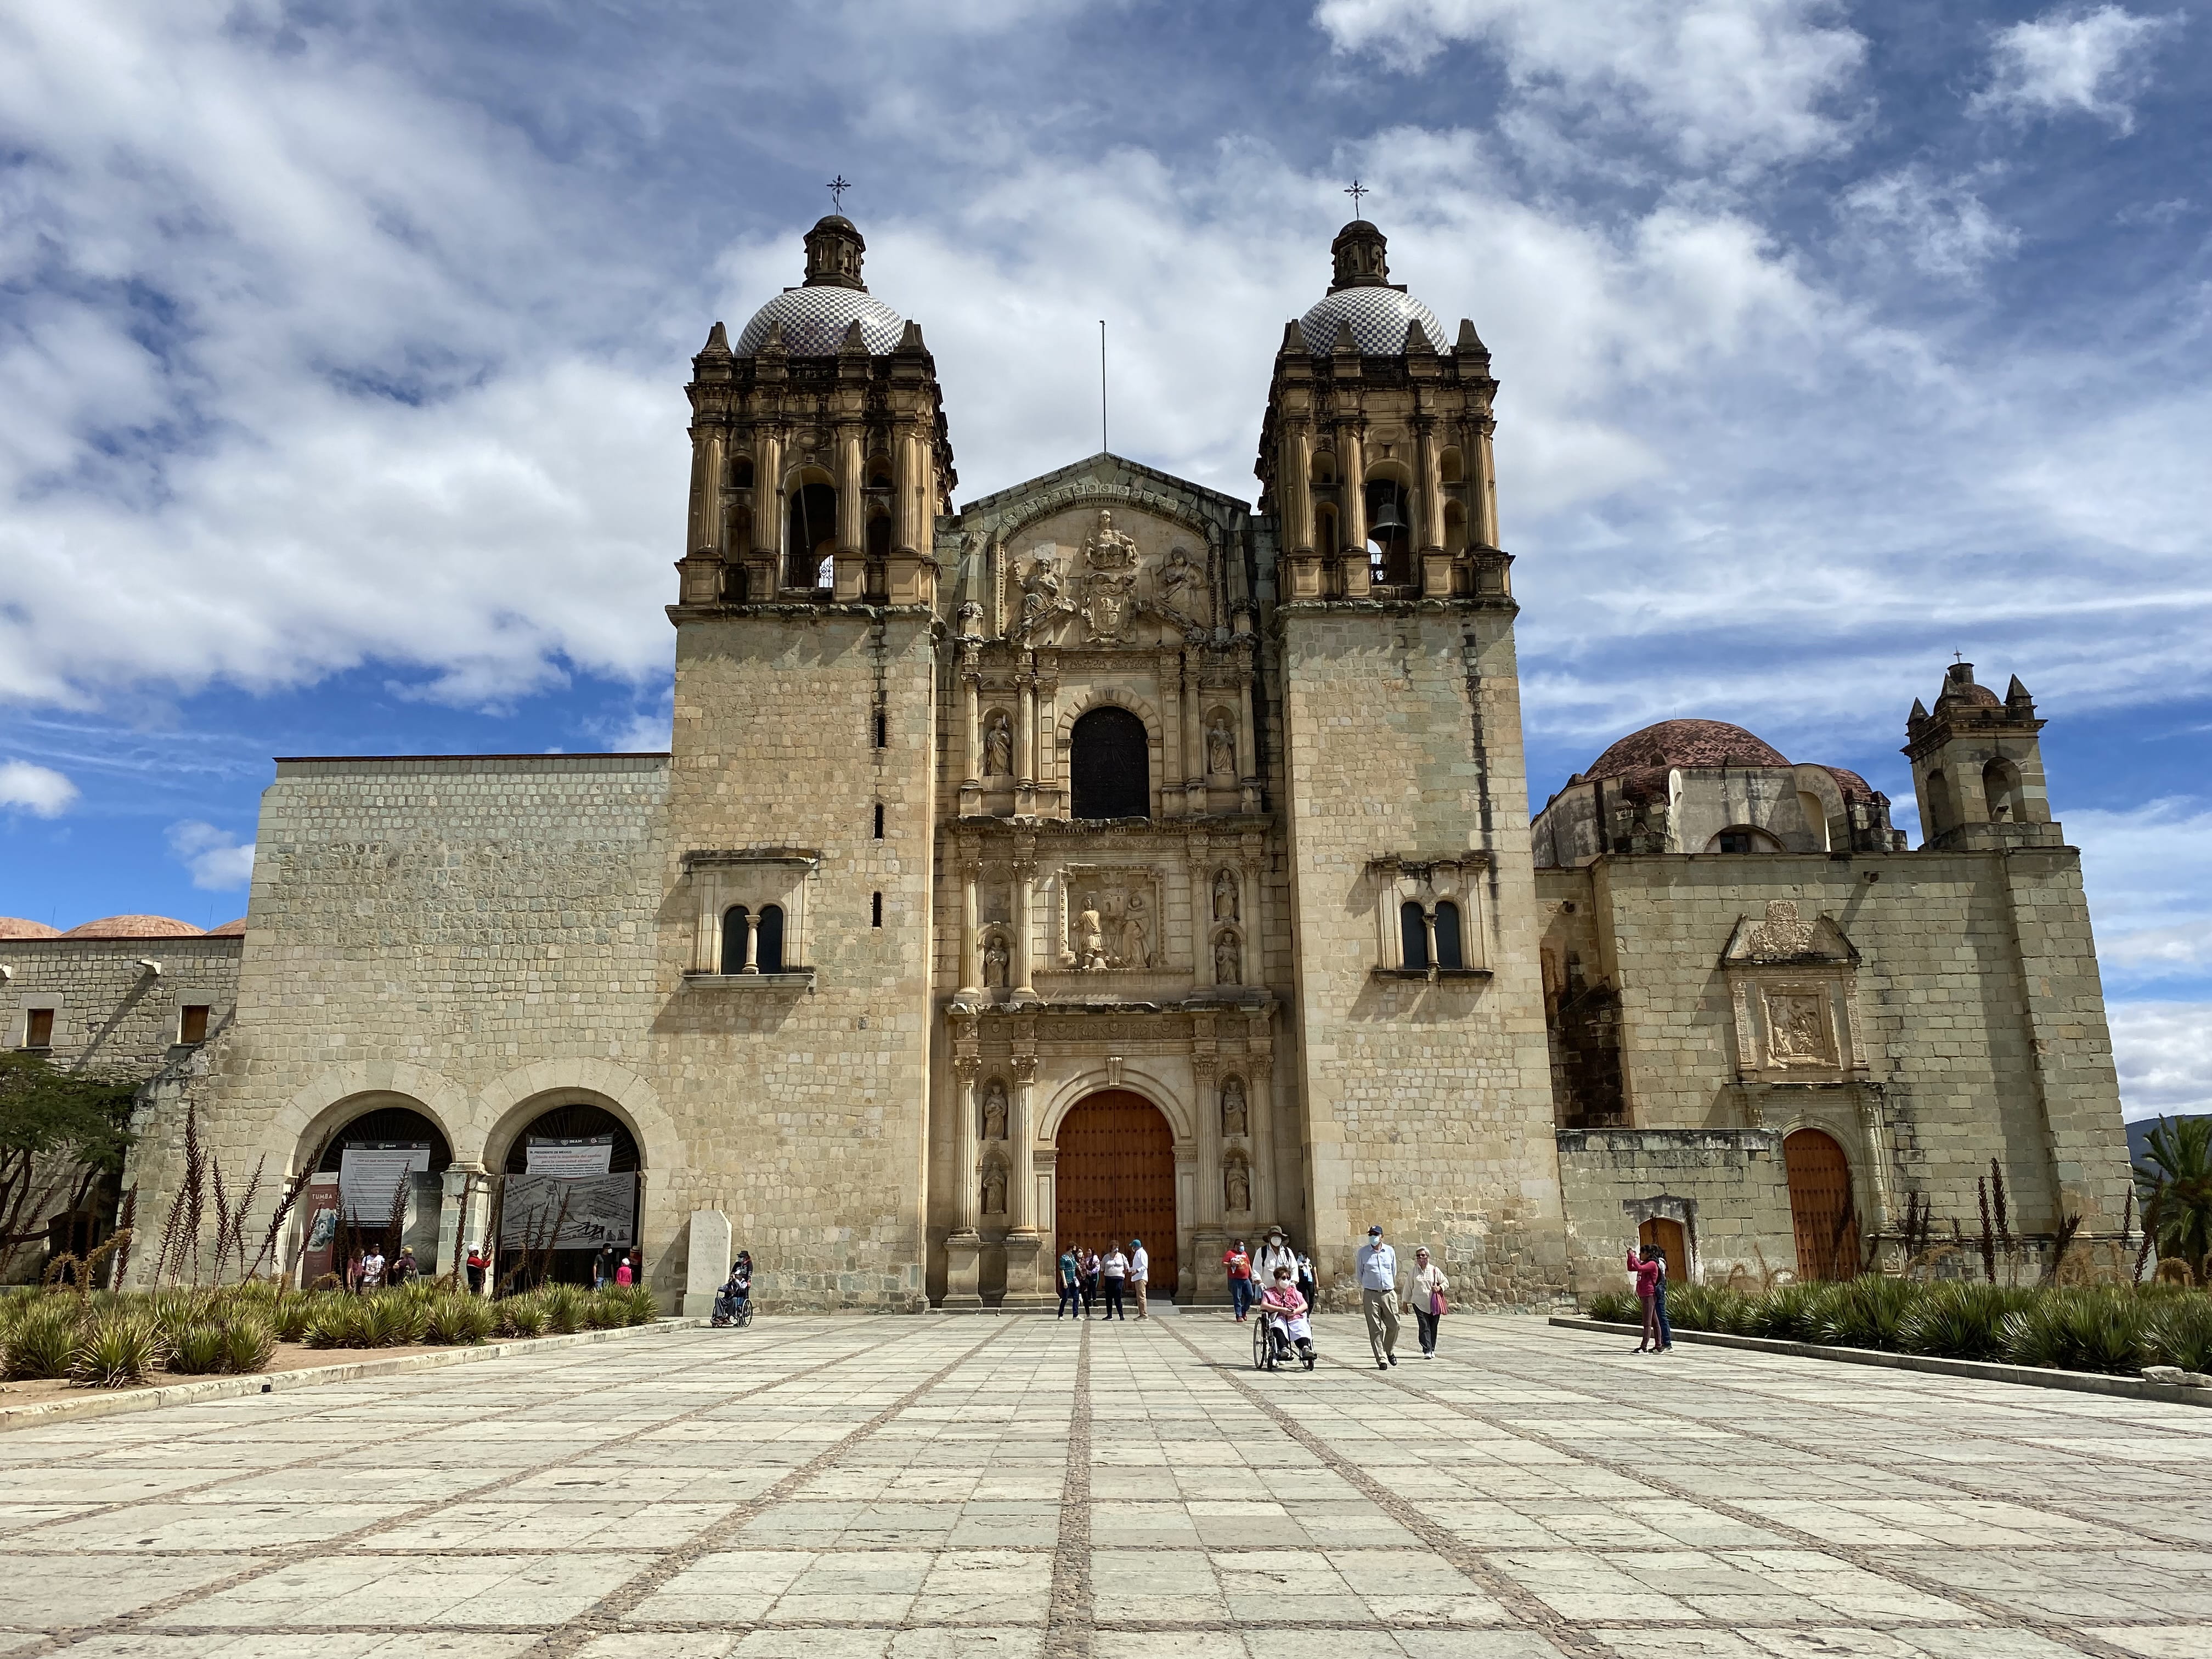 A historic building in Oaxaca.